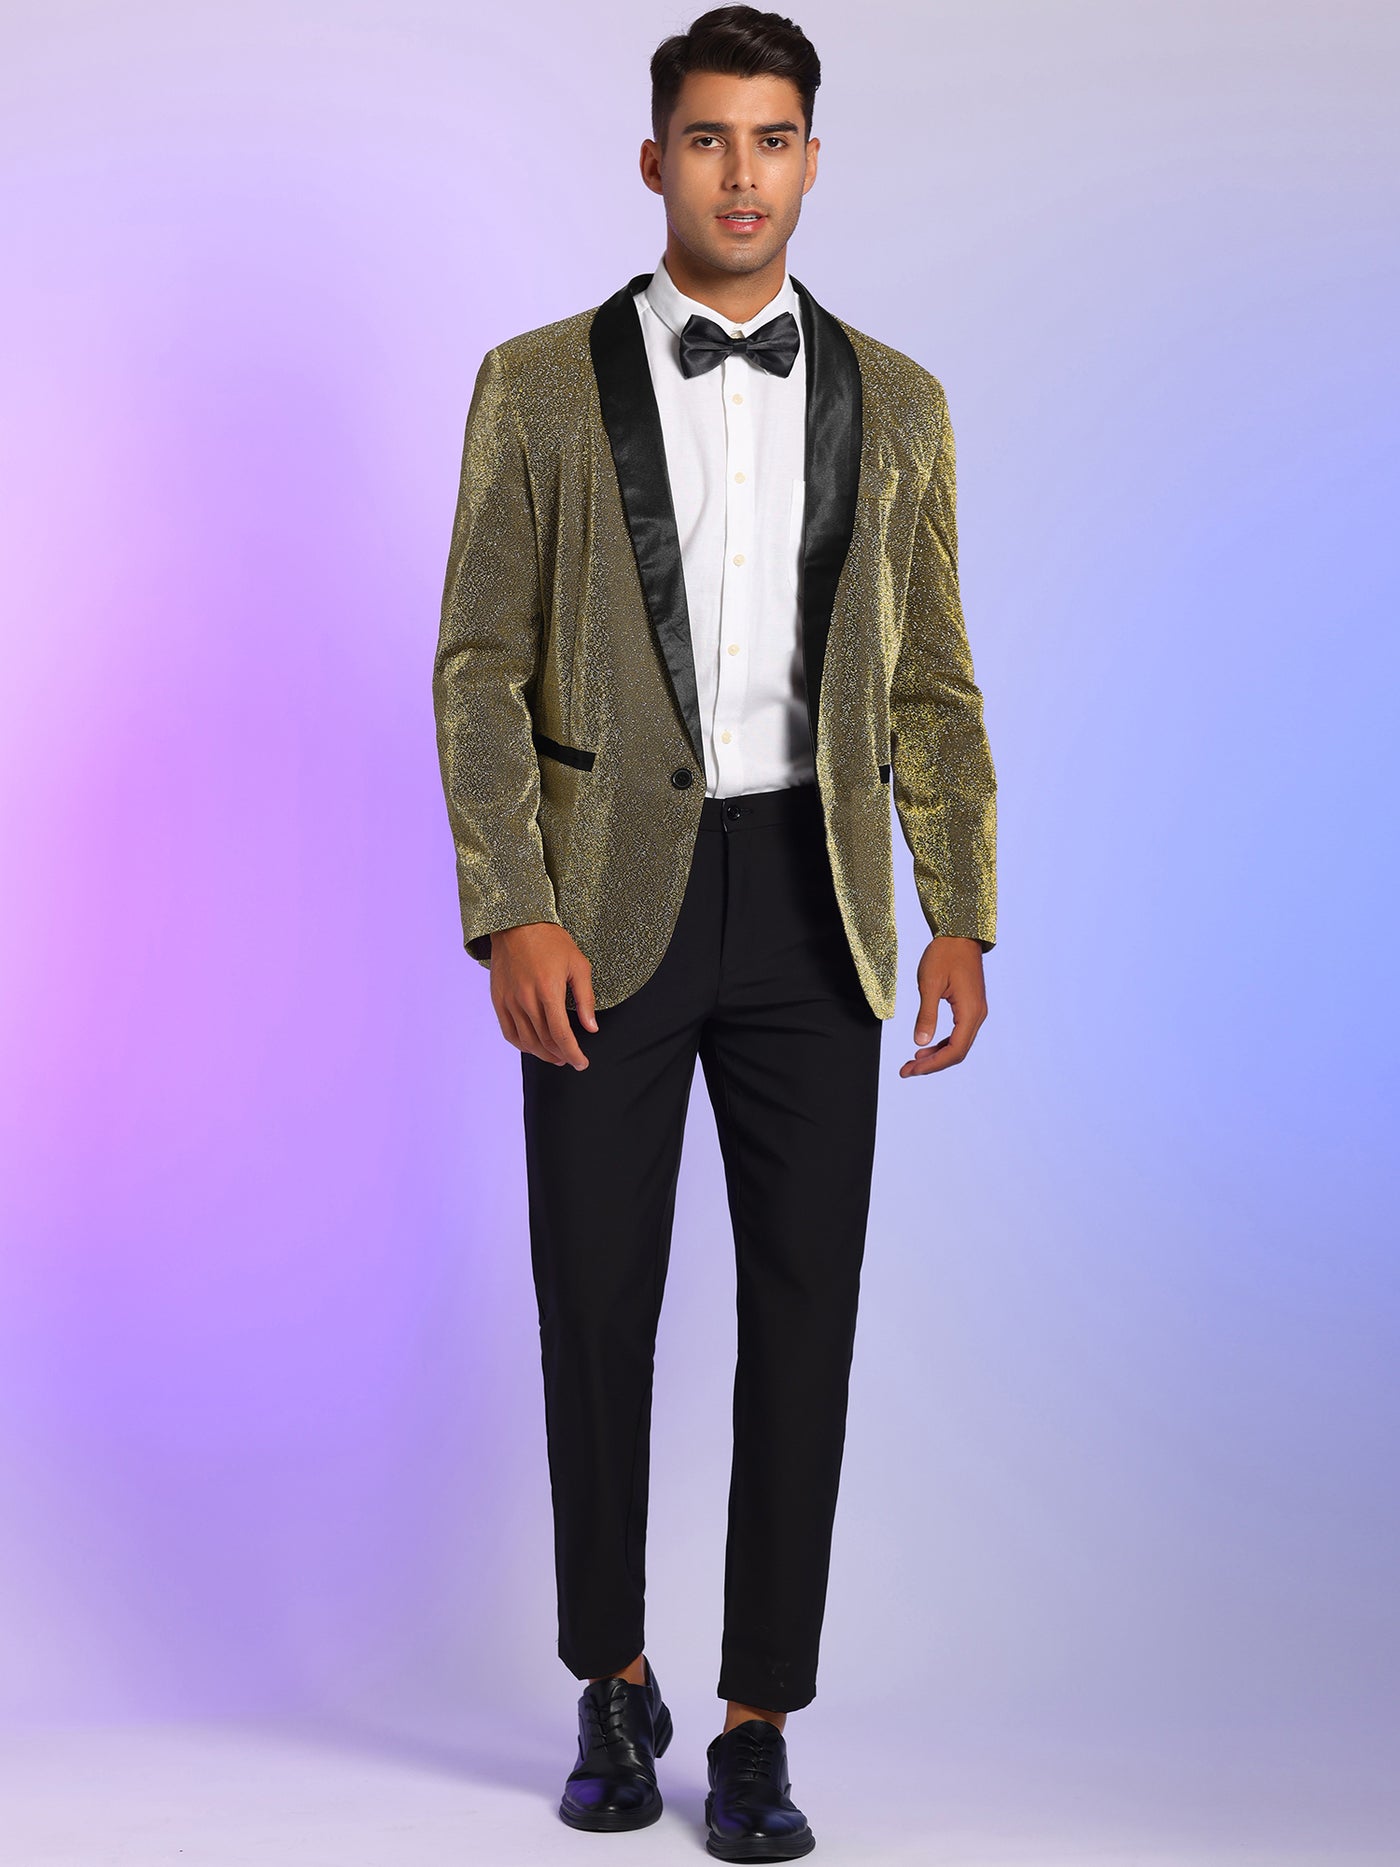 Bublédon Men's Sequin Sport Coats Shawl Lapel One Button Wedding Shiny Blazer